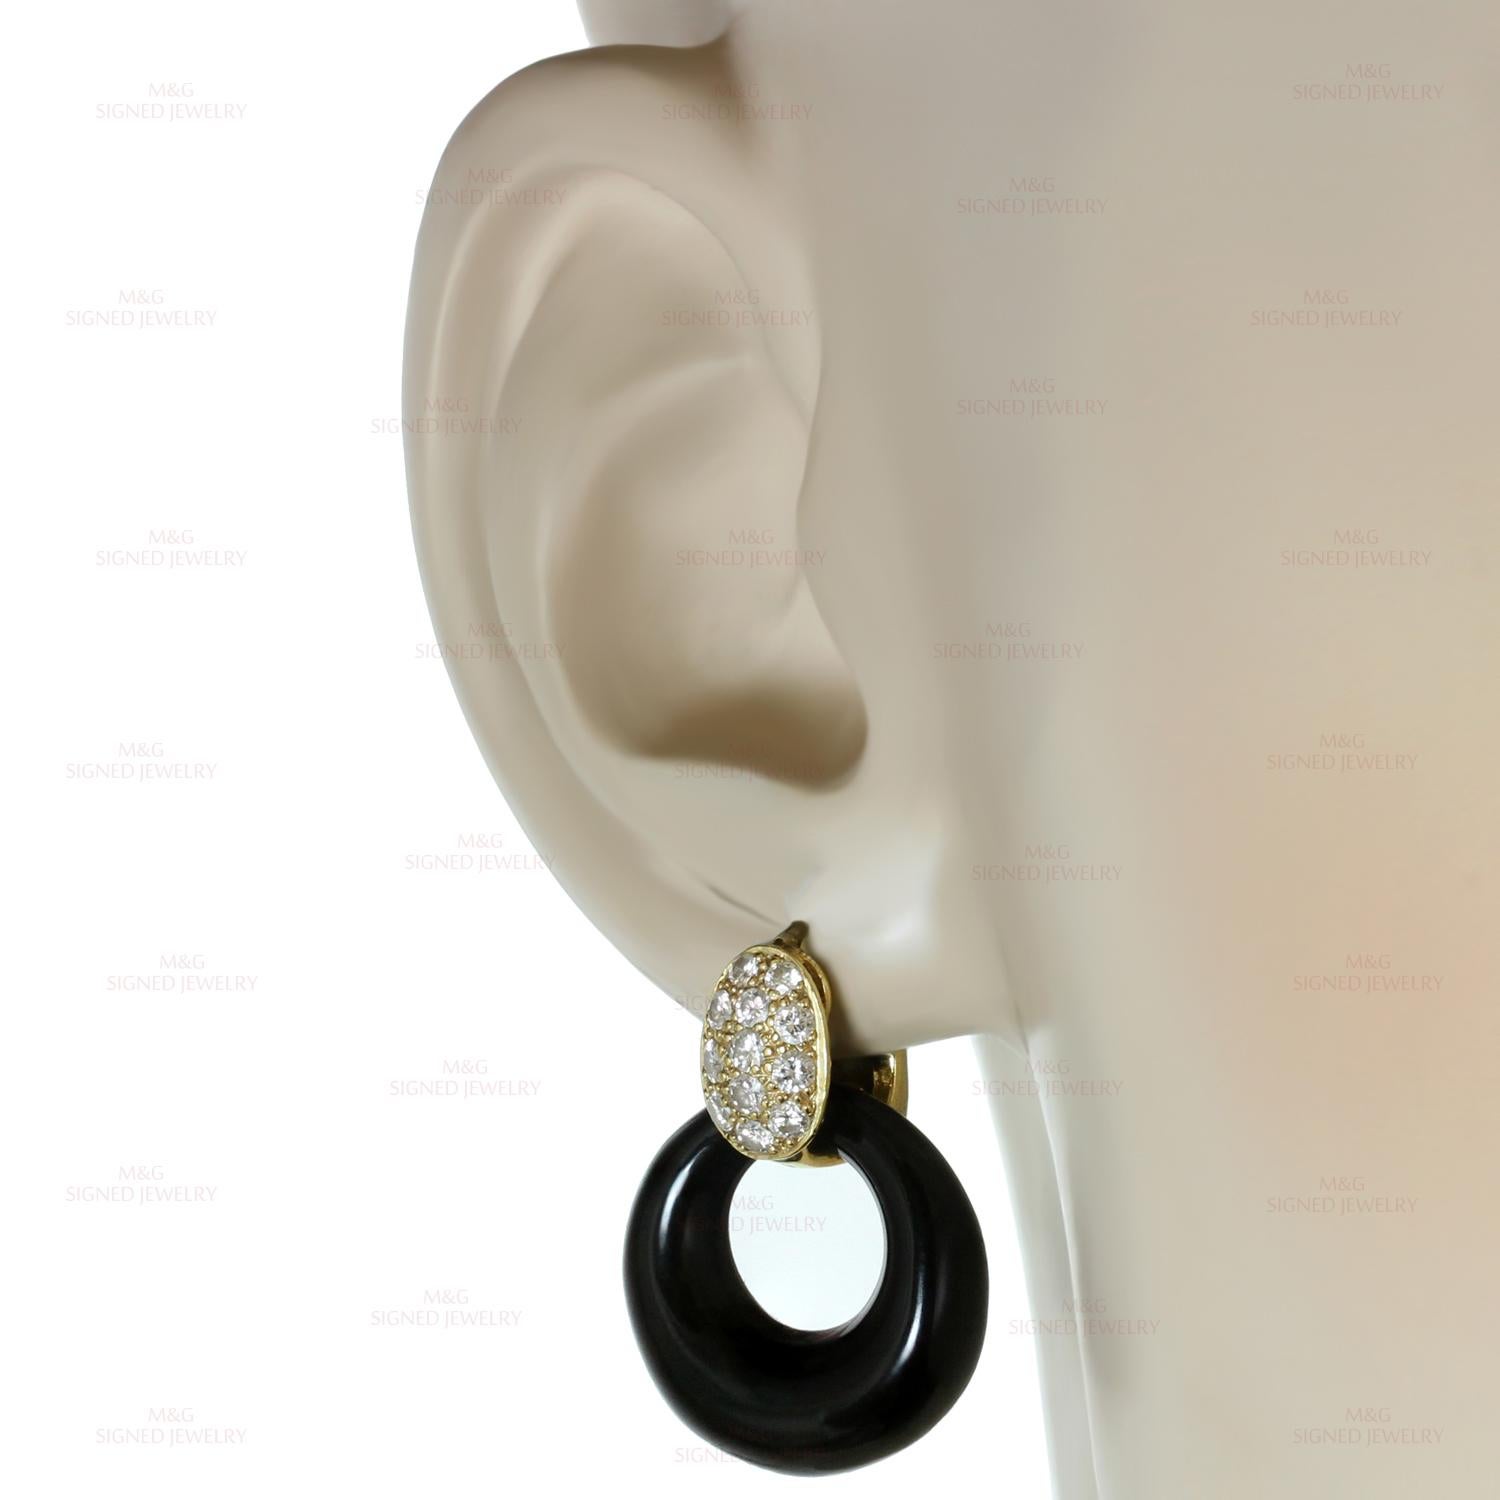 interchangable earrings